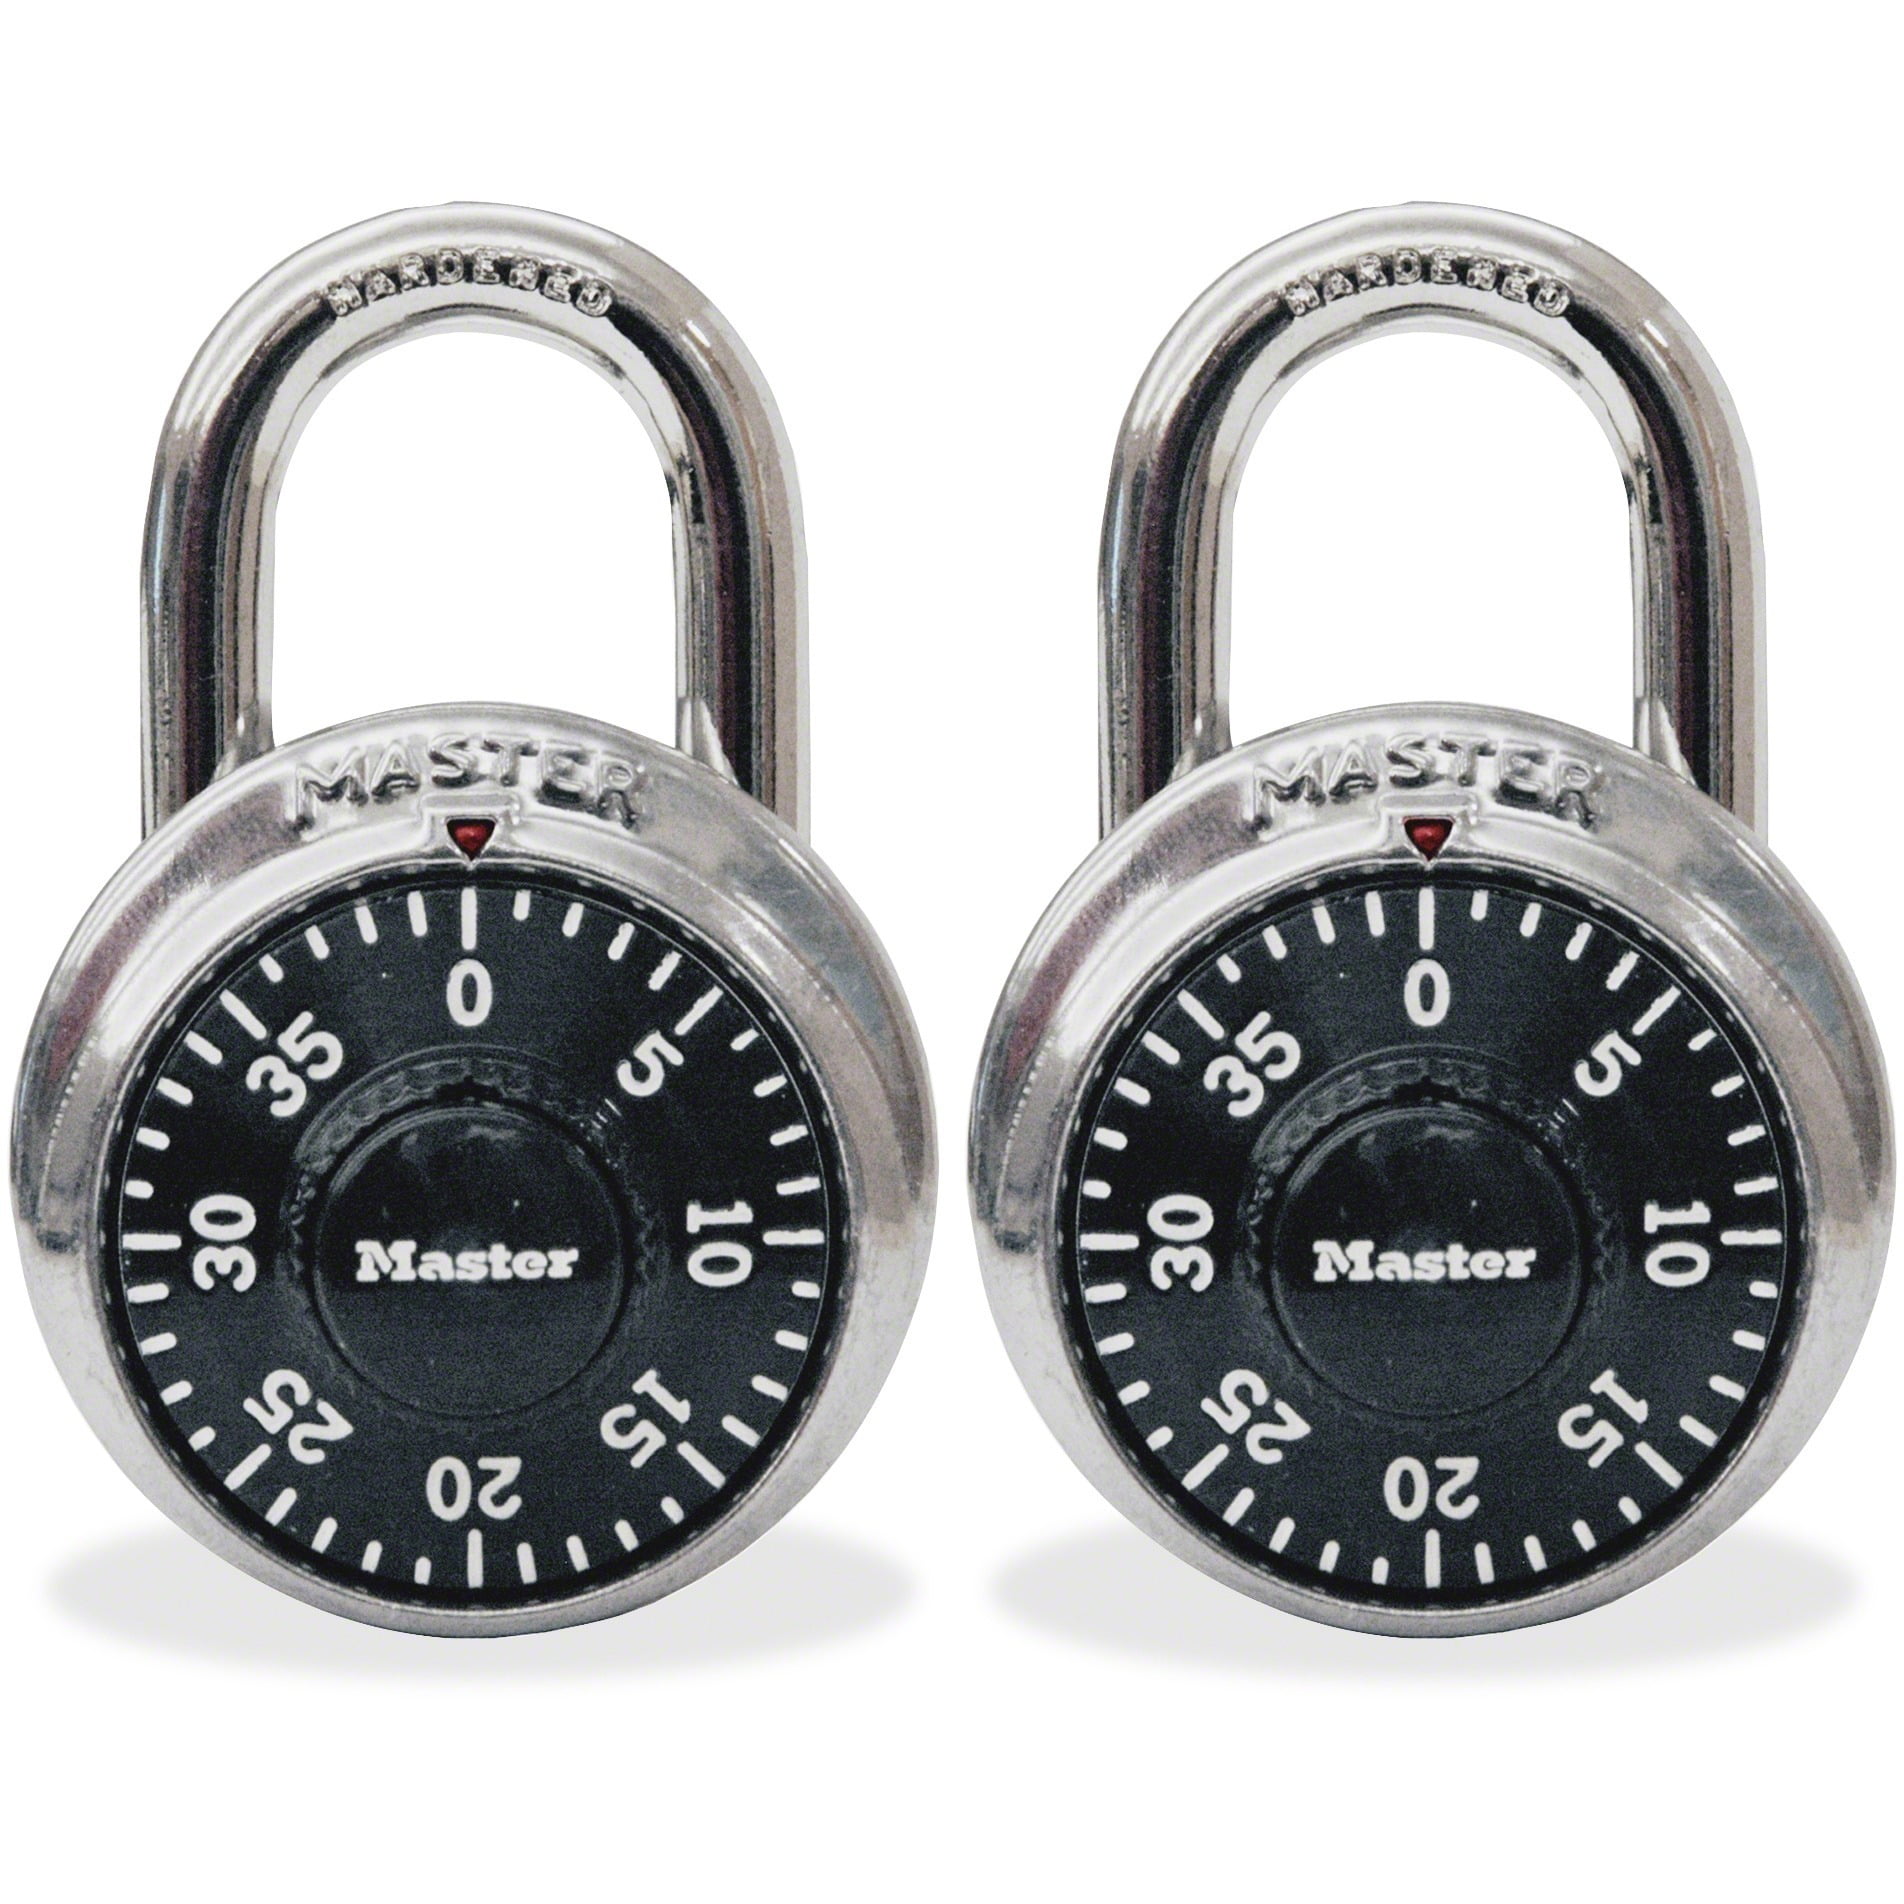 Bicycle Lock Combination Lock Tank Lock Numbers Lock 2 Keys 